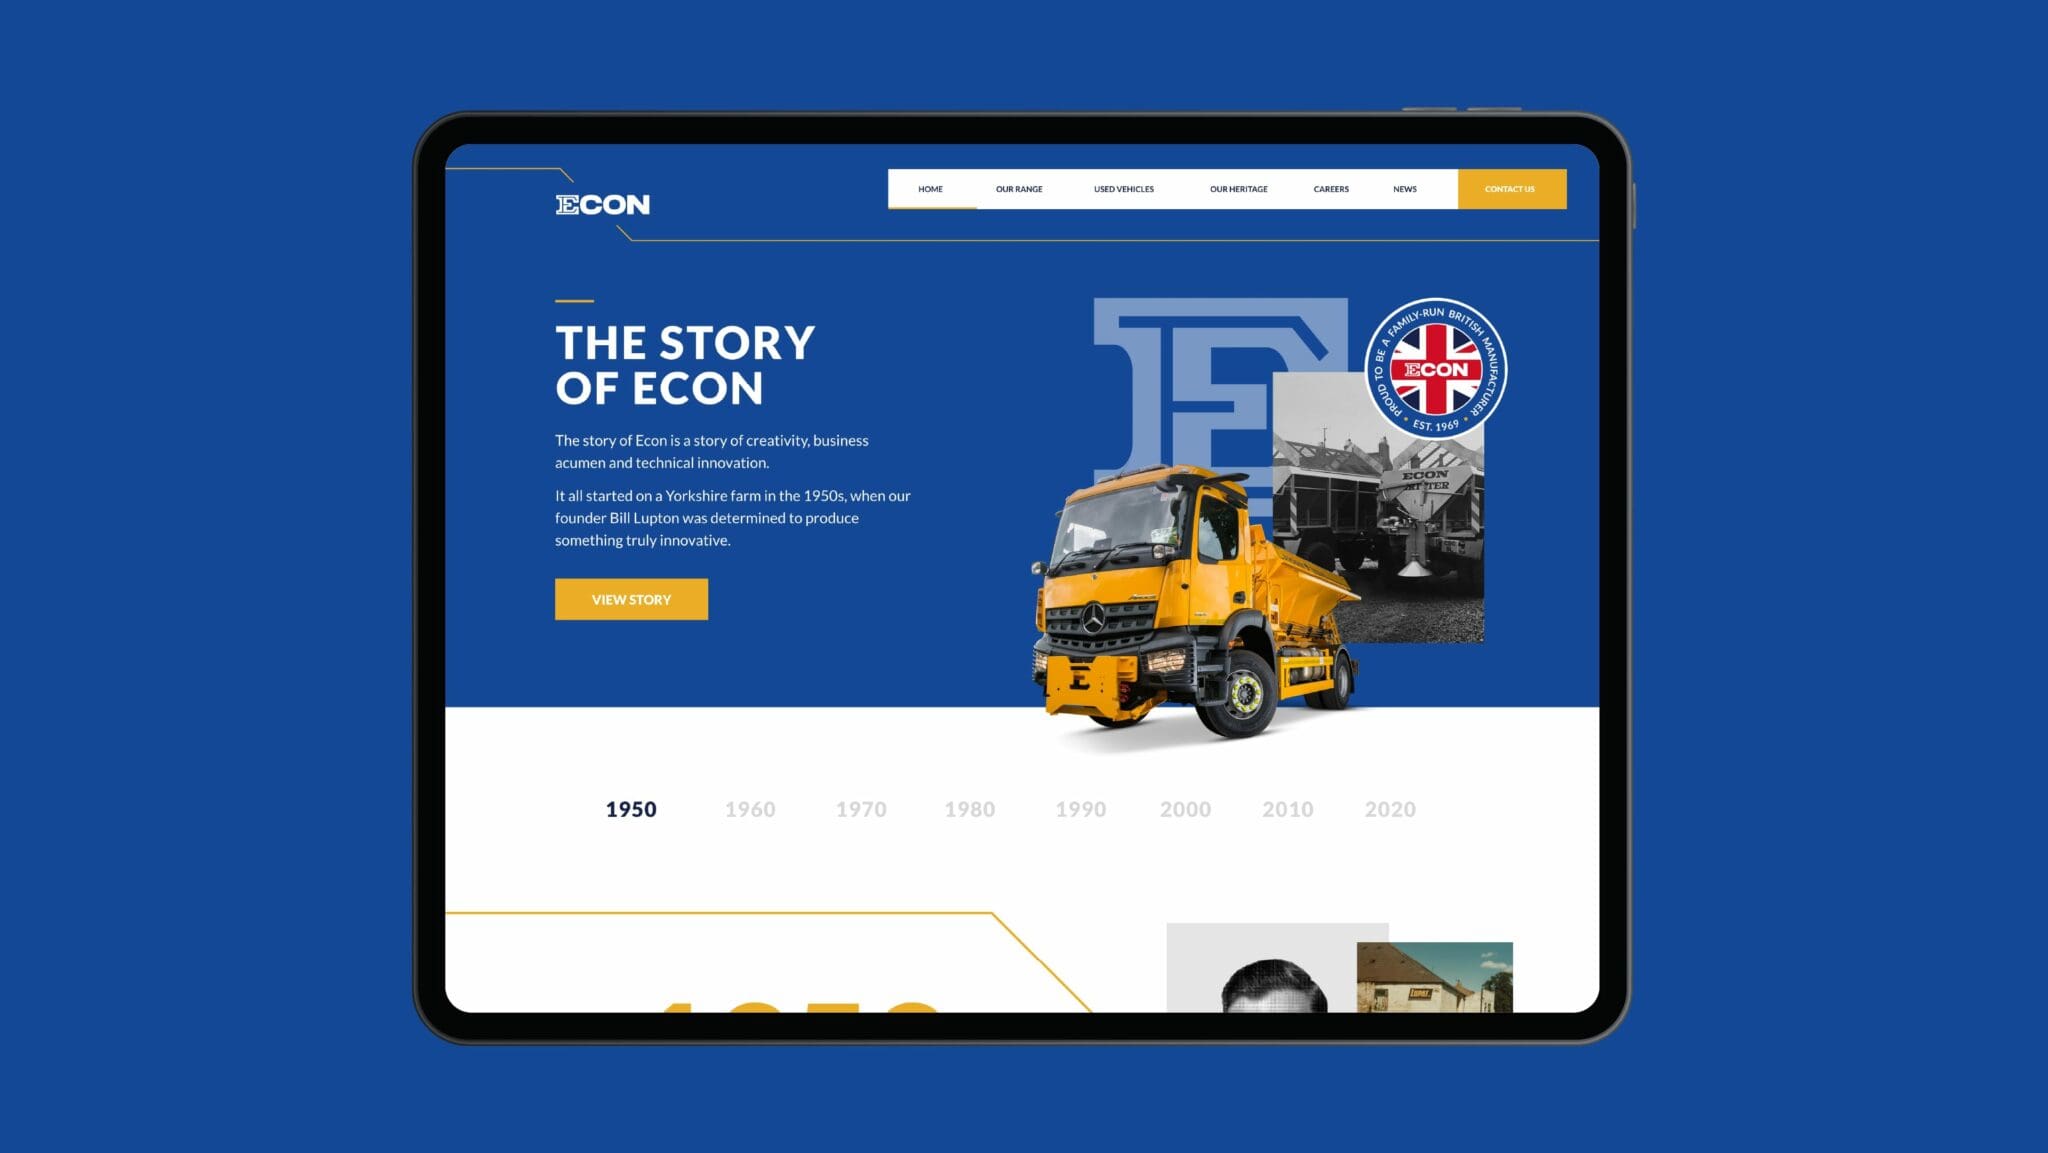 Econ Engineering responsive website Ux Ui design website development, website hosting by Bluestone98 - leading branding, design, digital and website company established in 98.